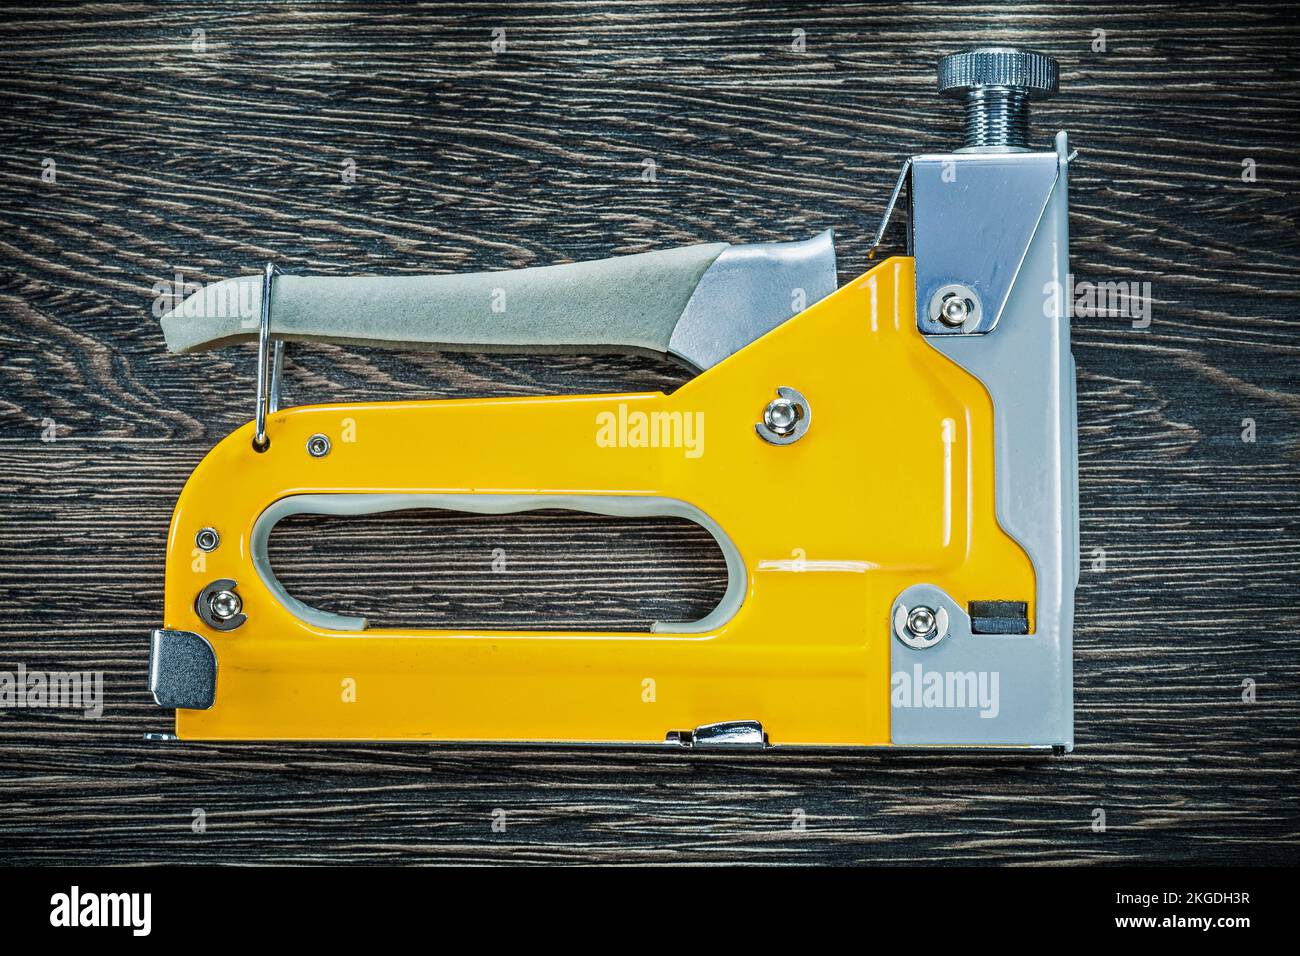 Building stapler gun on wooden board. Stock Photo